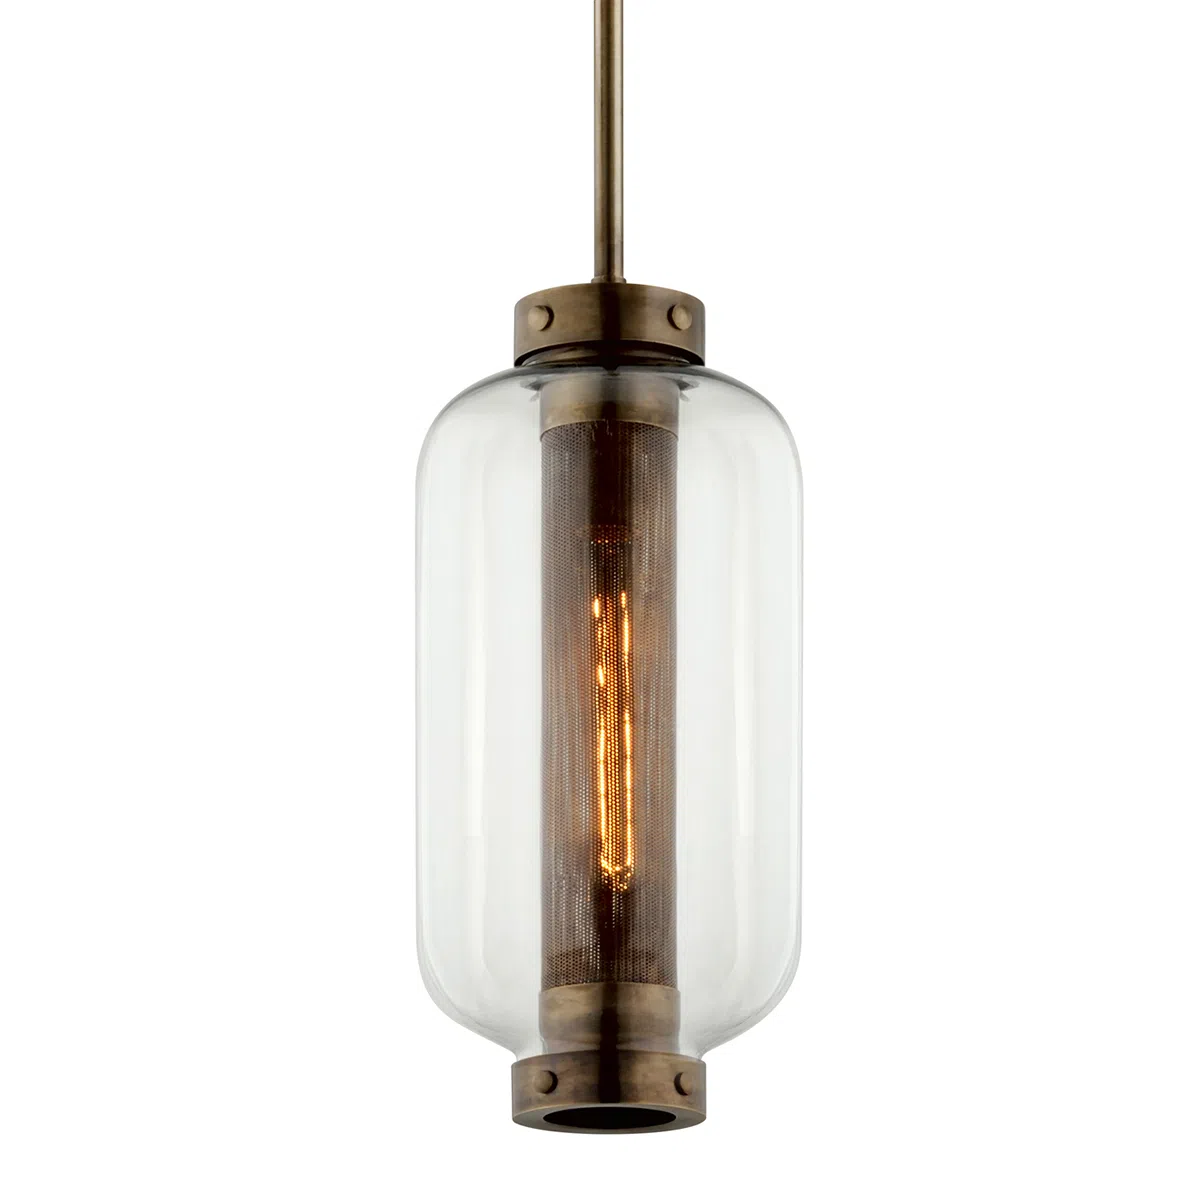 Buitenlamp plafondlamp hanglamp Atwater hudson valley lighting tuinextra exclusieve buitenverlichting